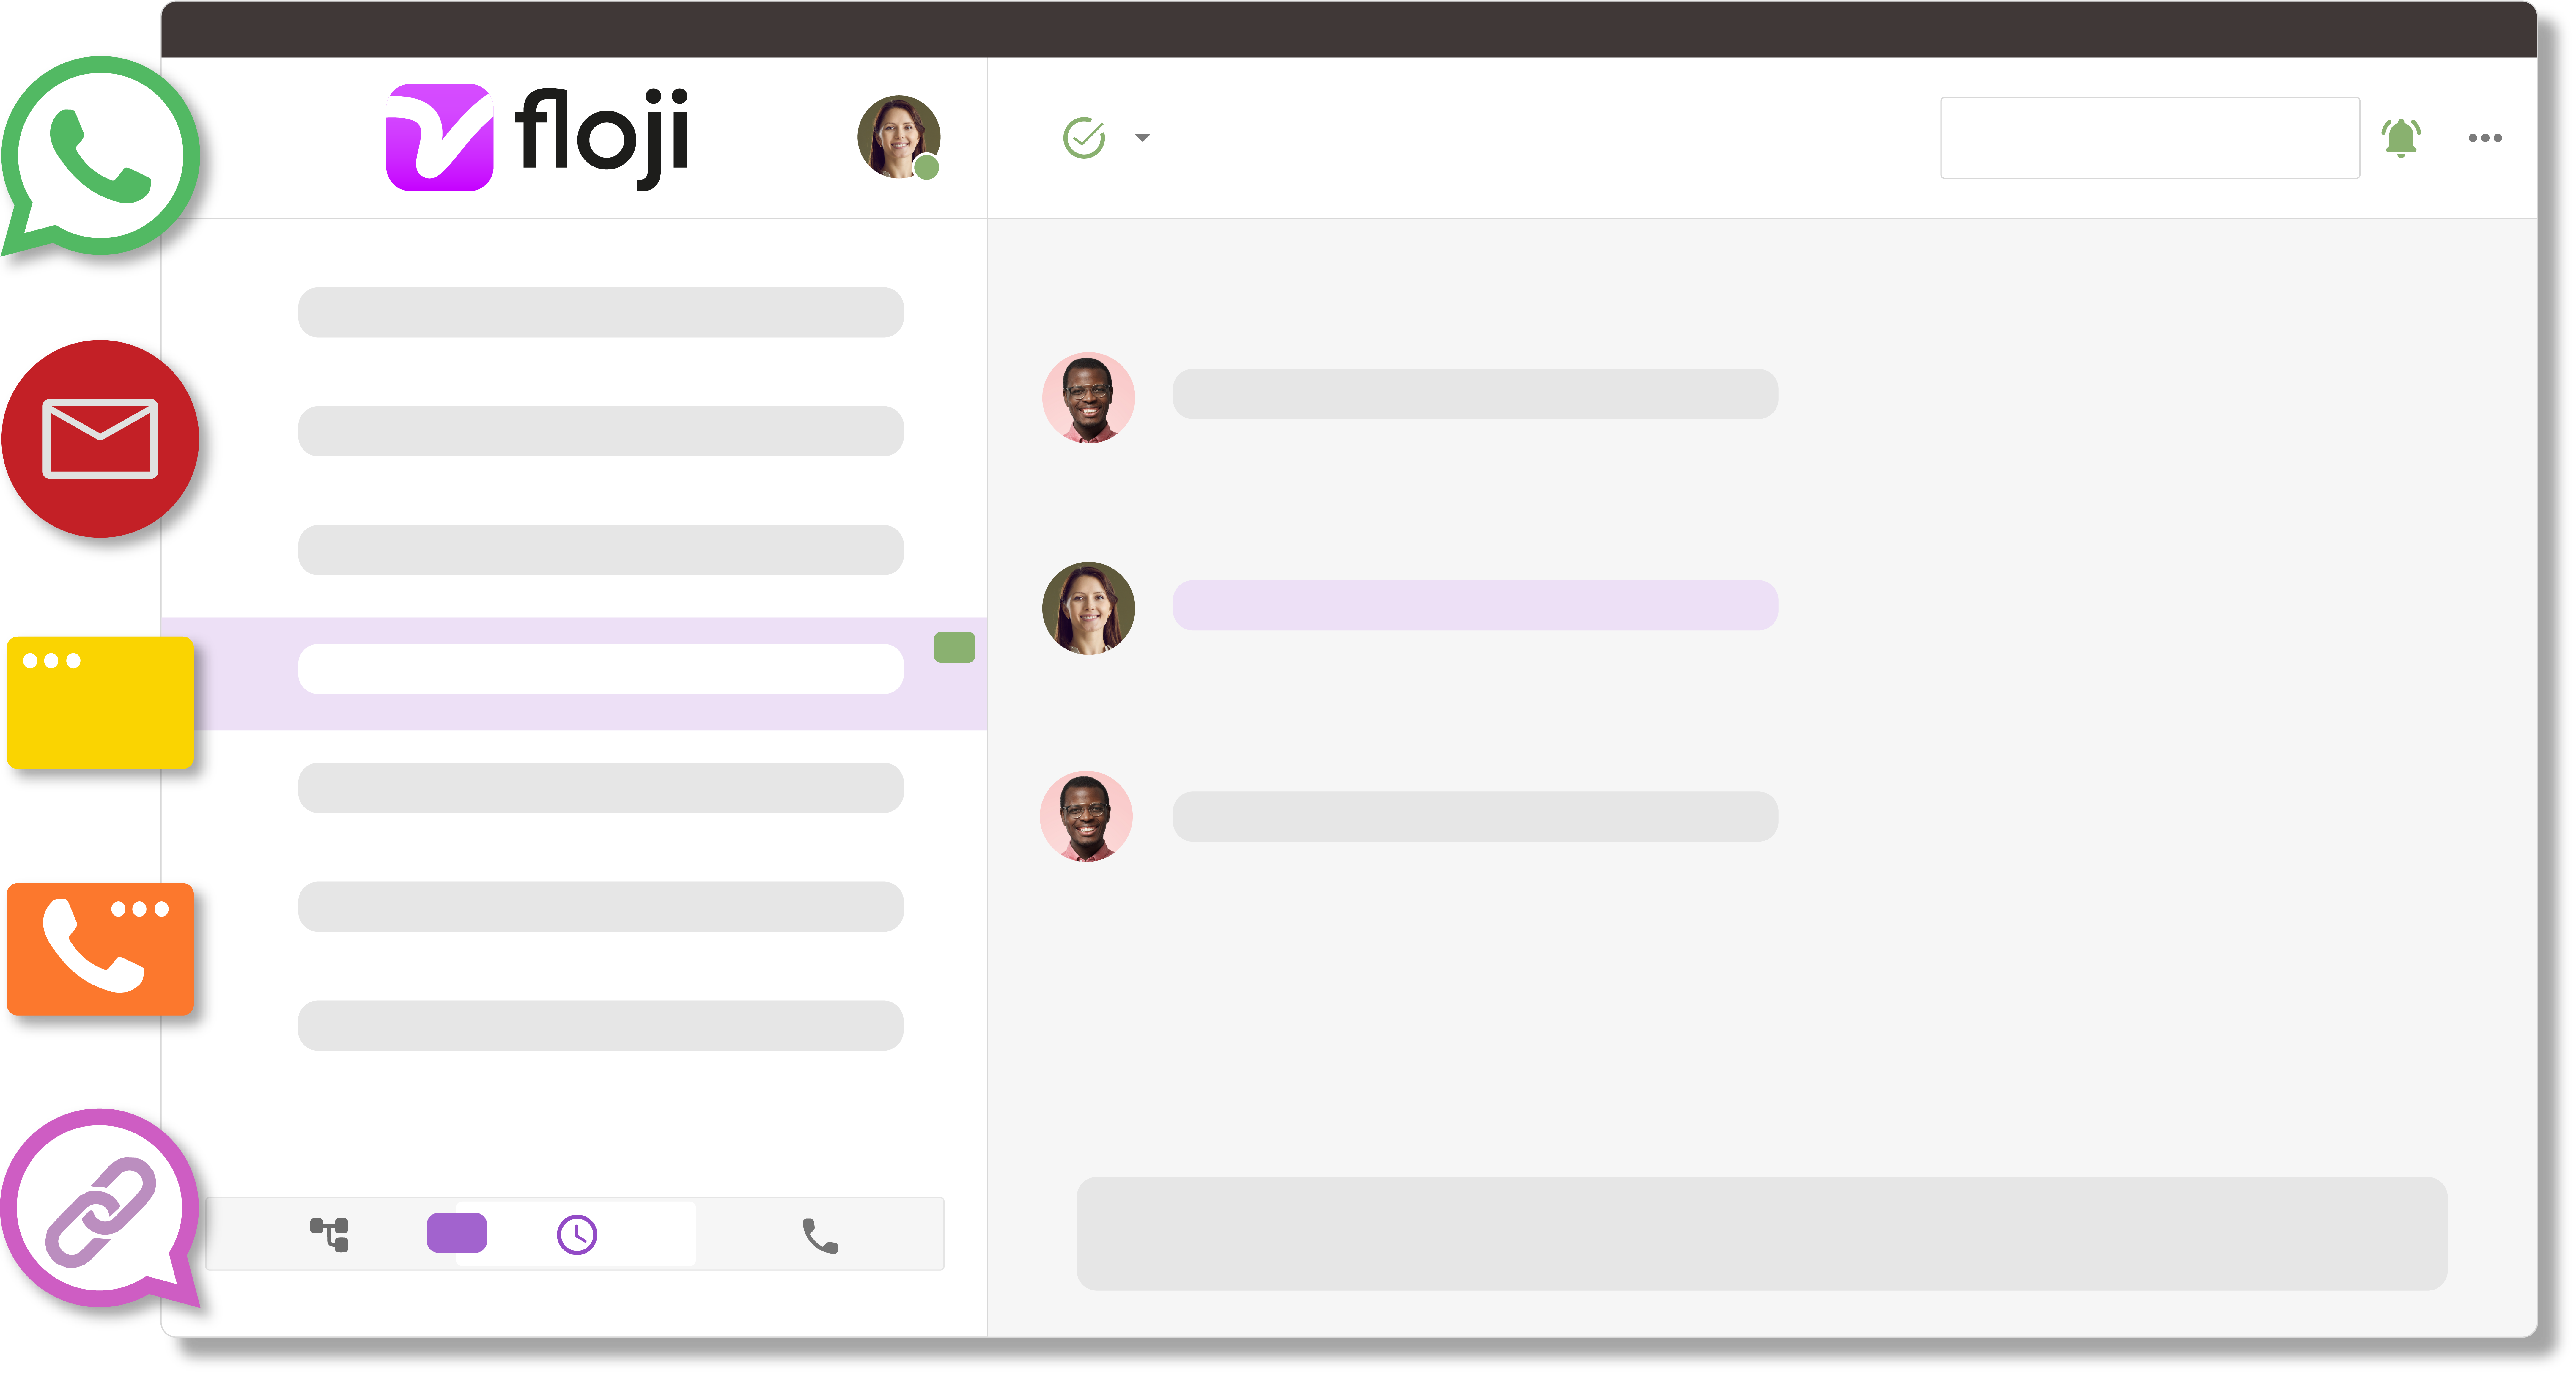 Stylised screenshot of Floji omnichannel communications platform.